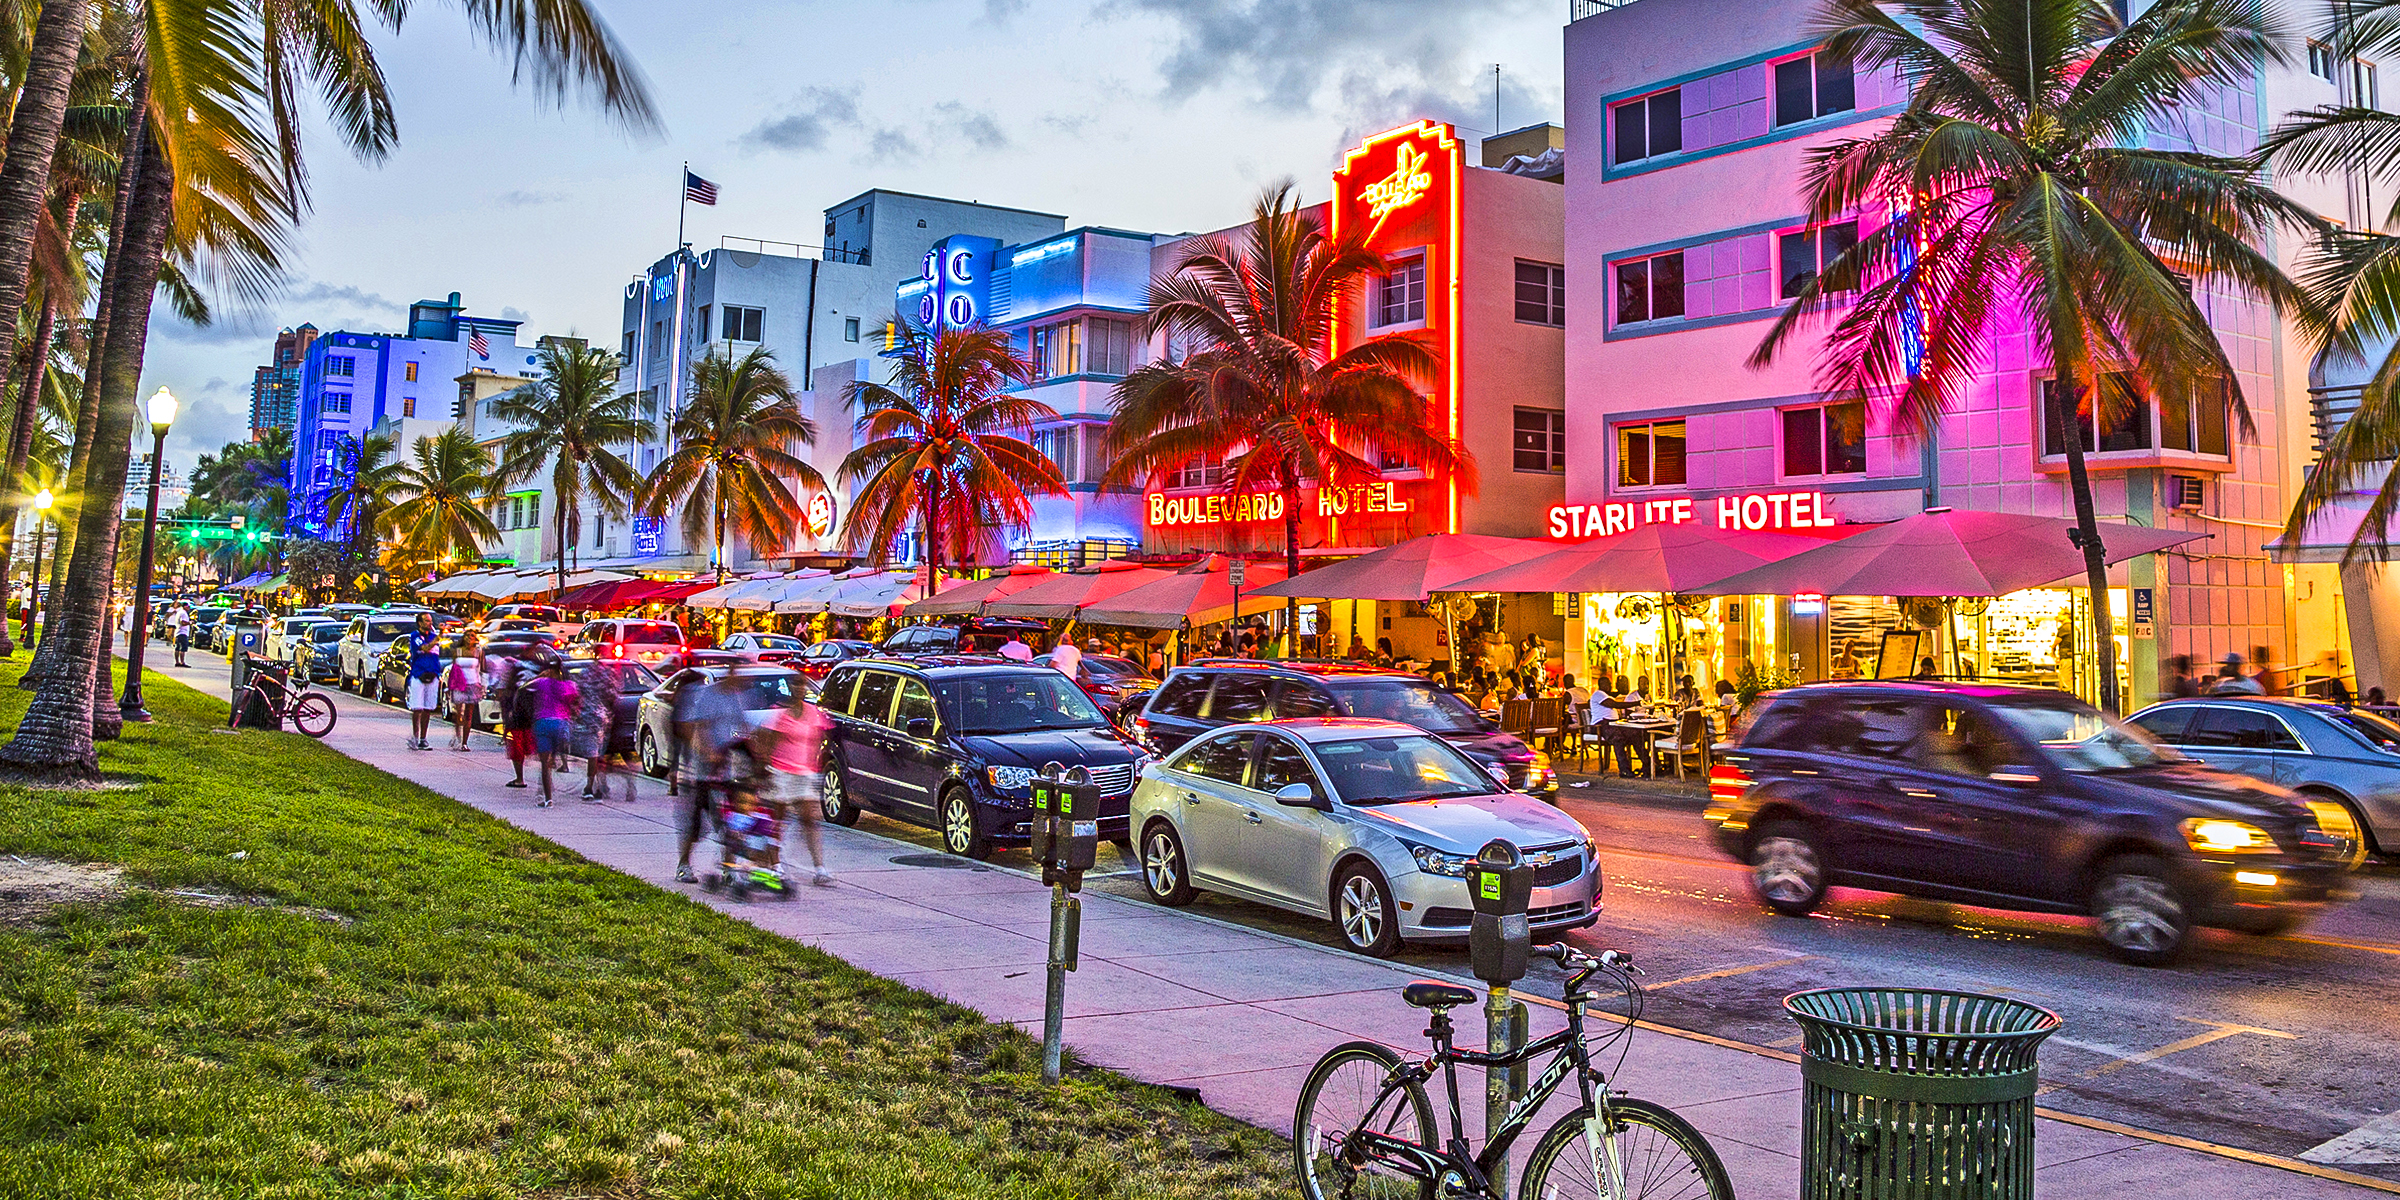 Neon-lit buildings in Miami, Florida | Source: Shutterstock